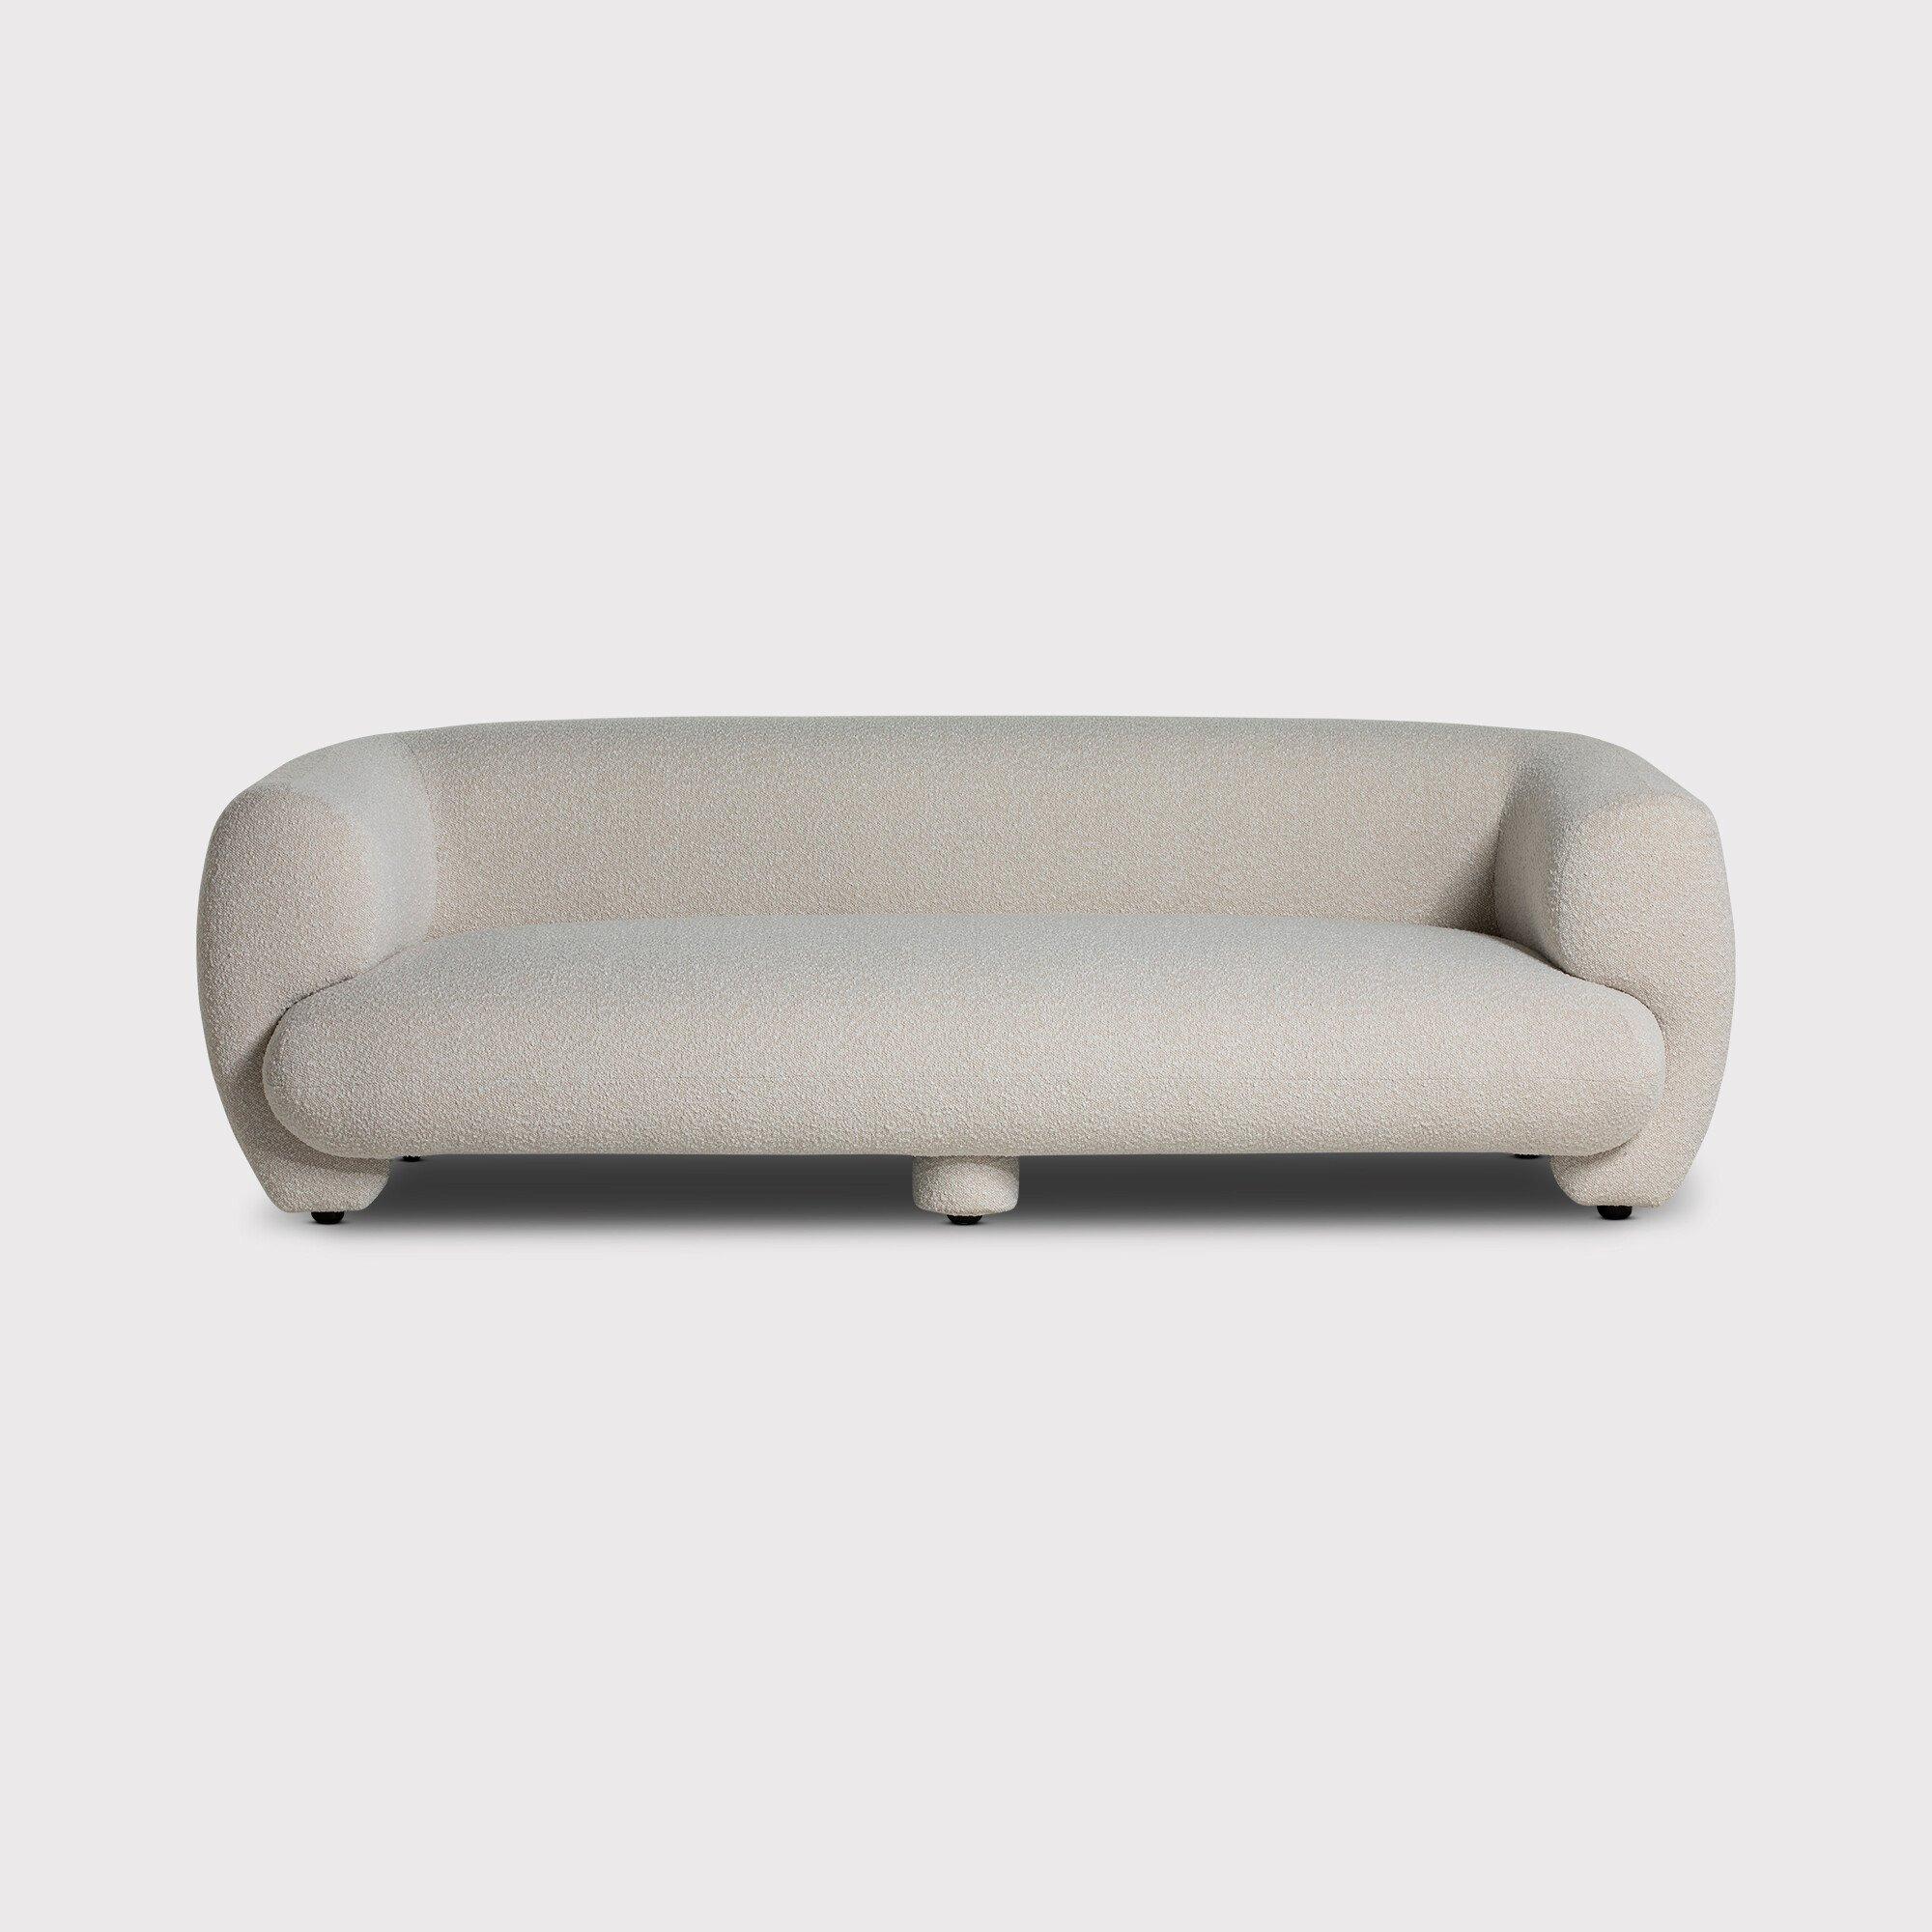 Edmonia 3 Seater Sofa, Neutral Boucle - Barker & Stonehouse - image 1